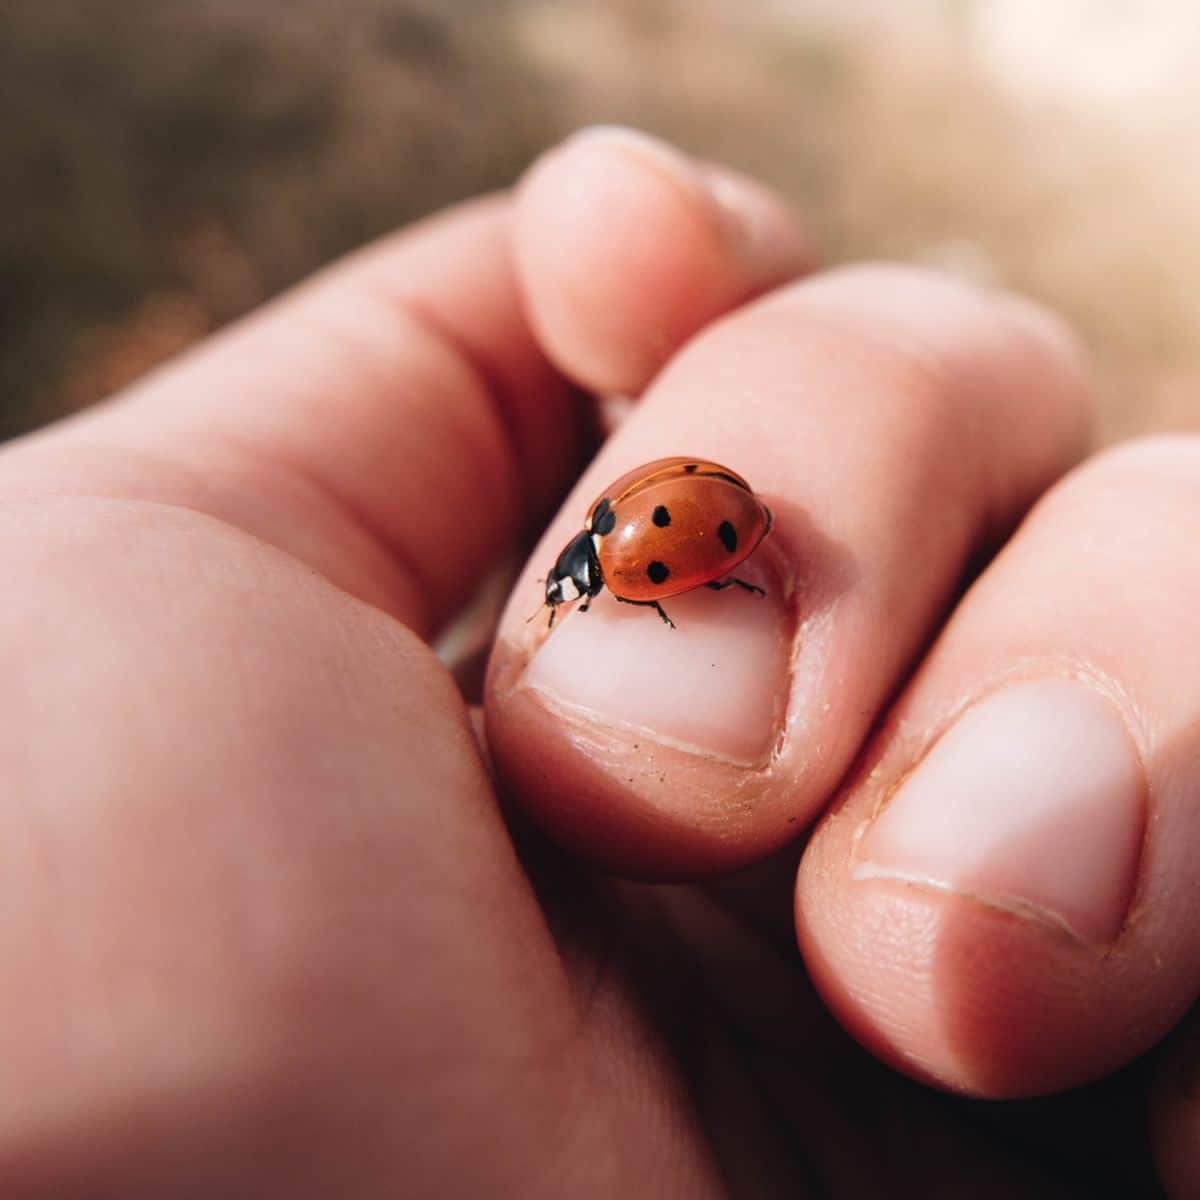 ladybug symbolism